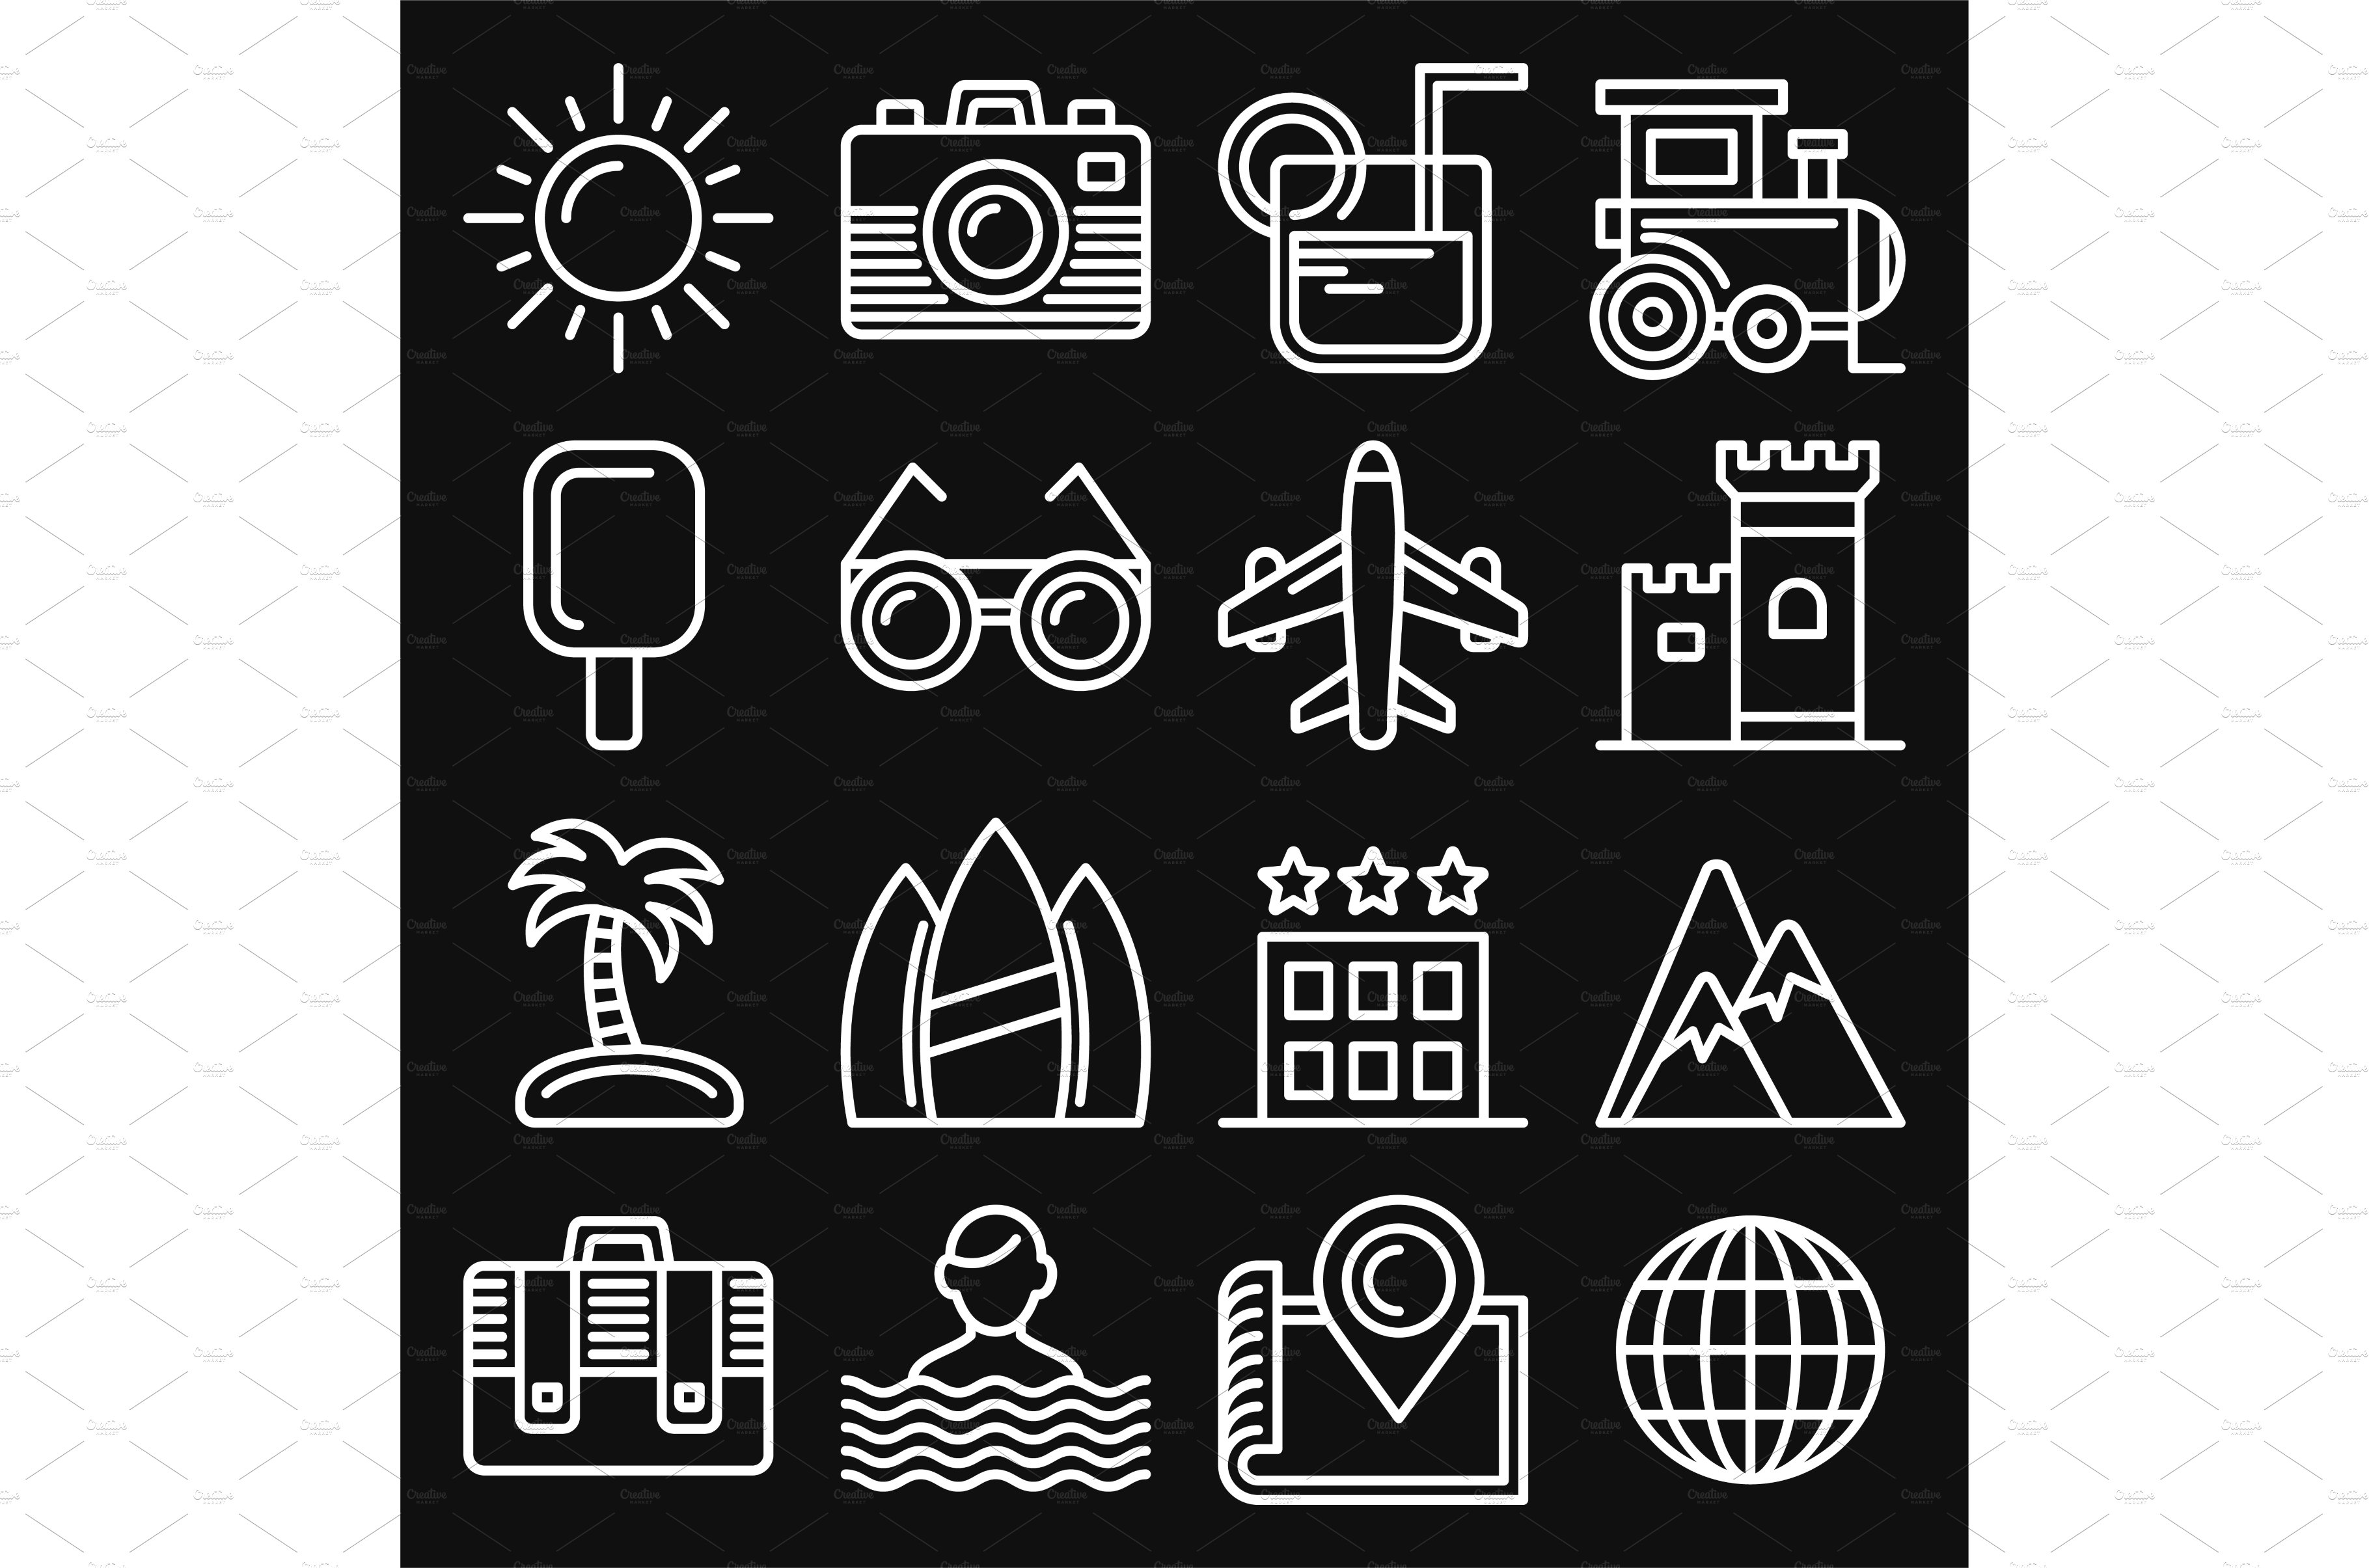 Summer Icons Set on Black Background cover image.